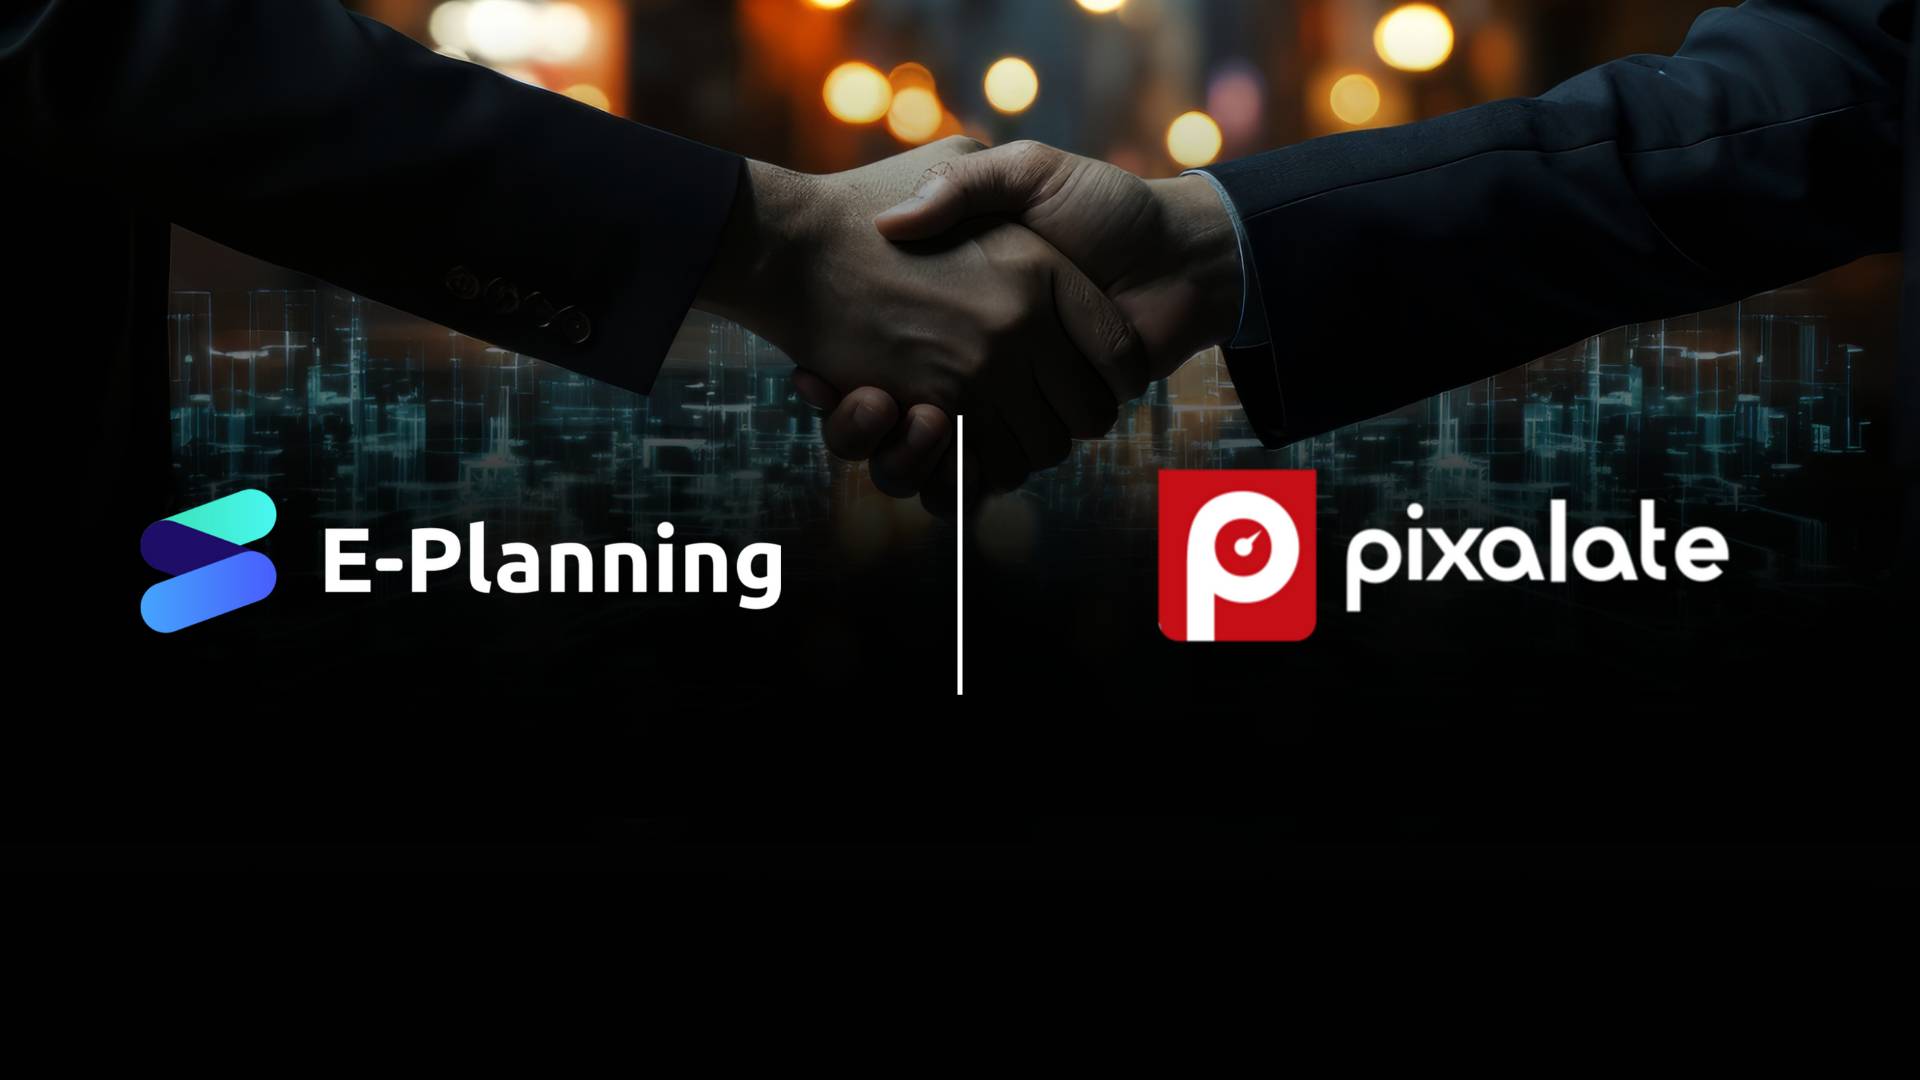 E-Planning Bolsters Programmatic Advertising with Enhanced Pixalate Partnership